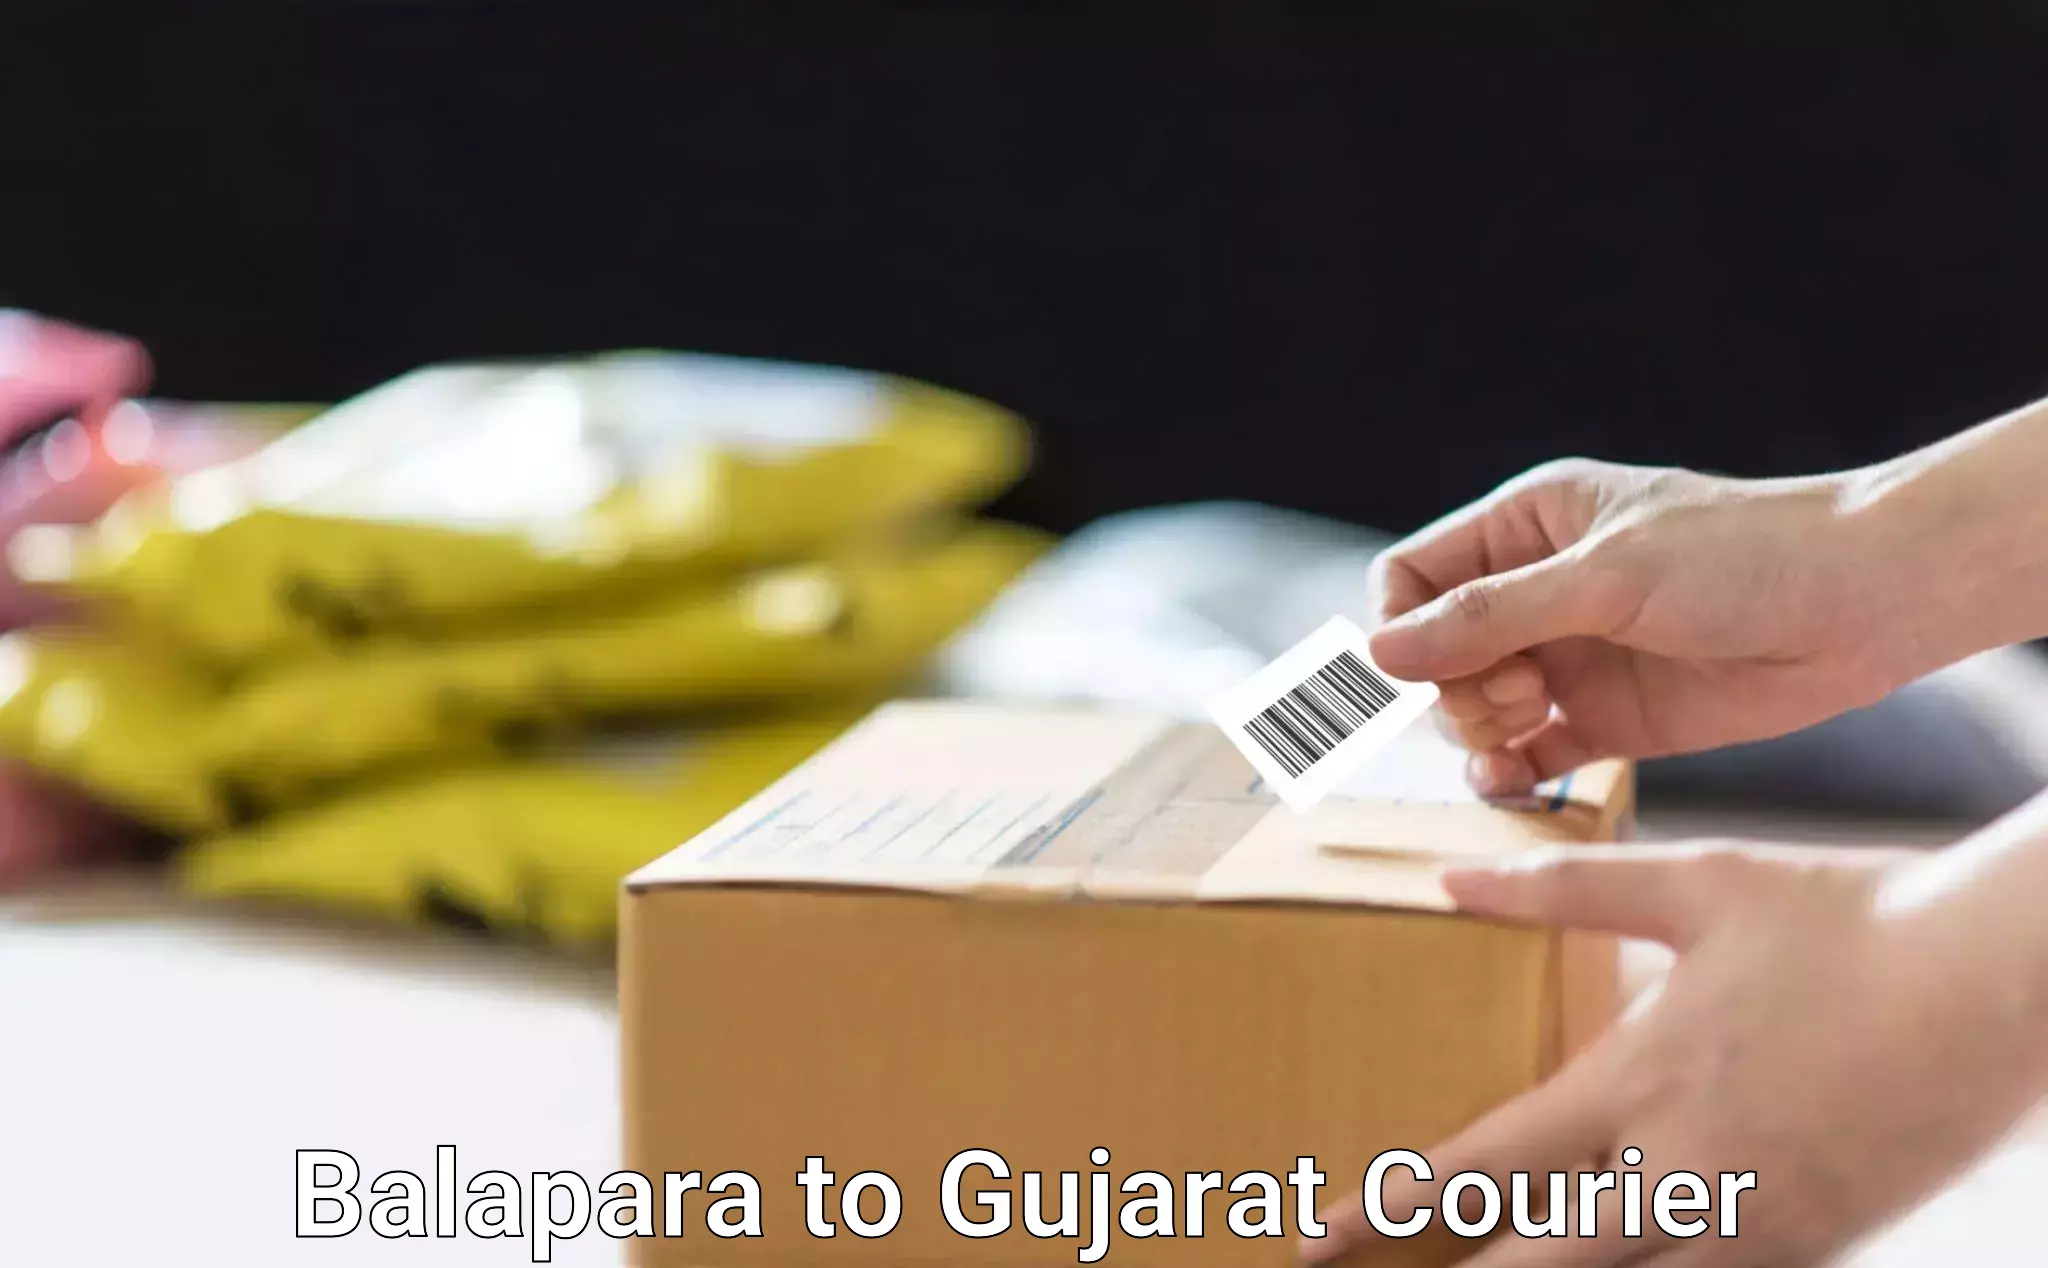 Speedy delivery service Balapara to Gujarat